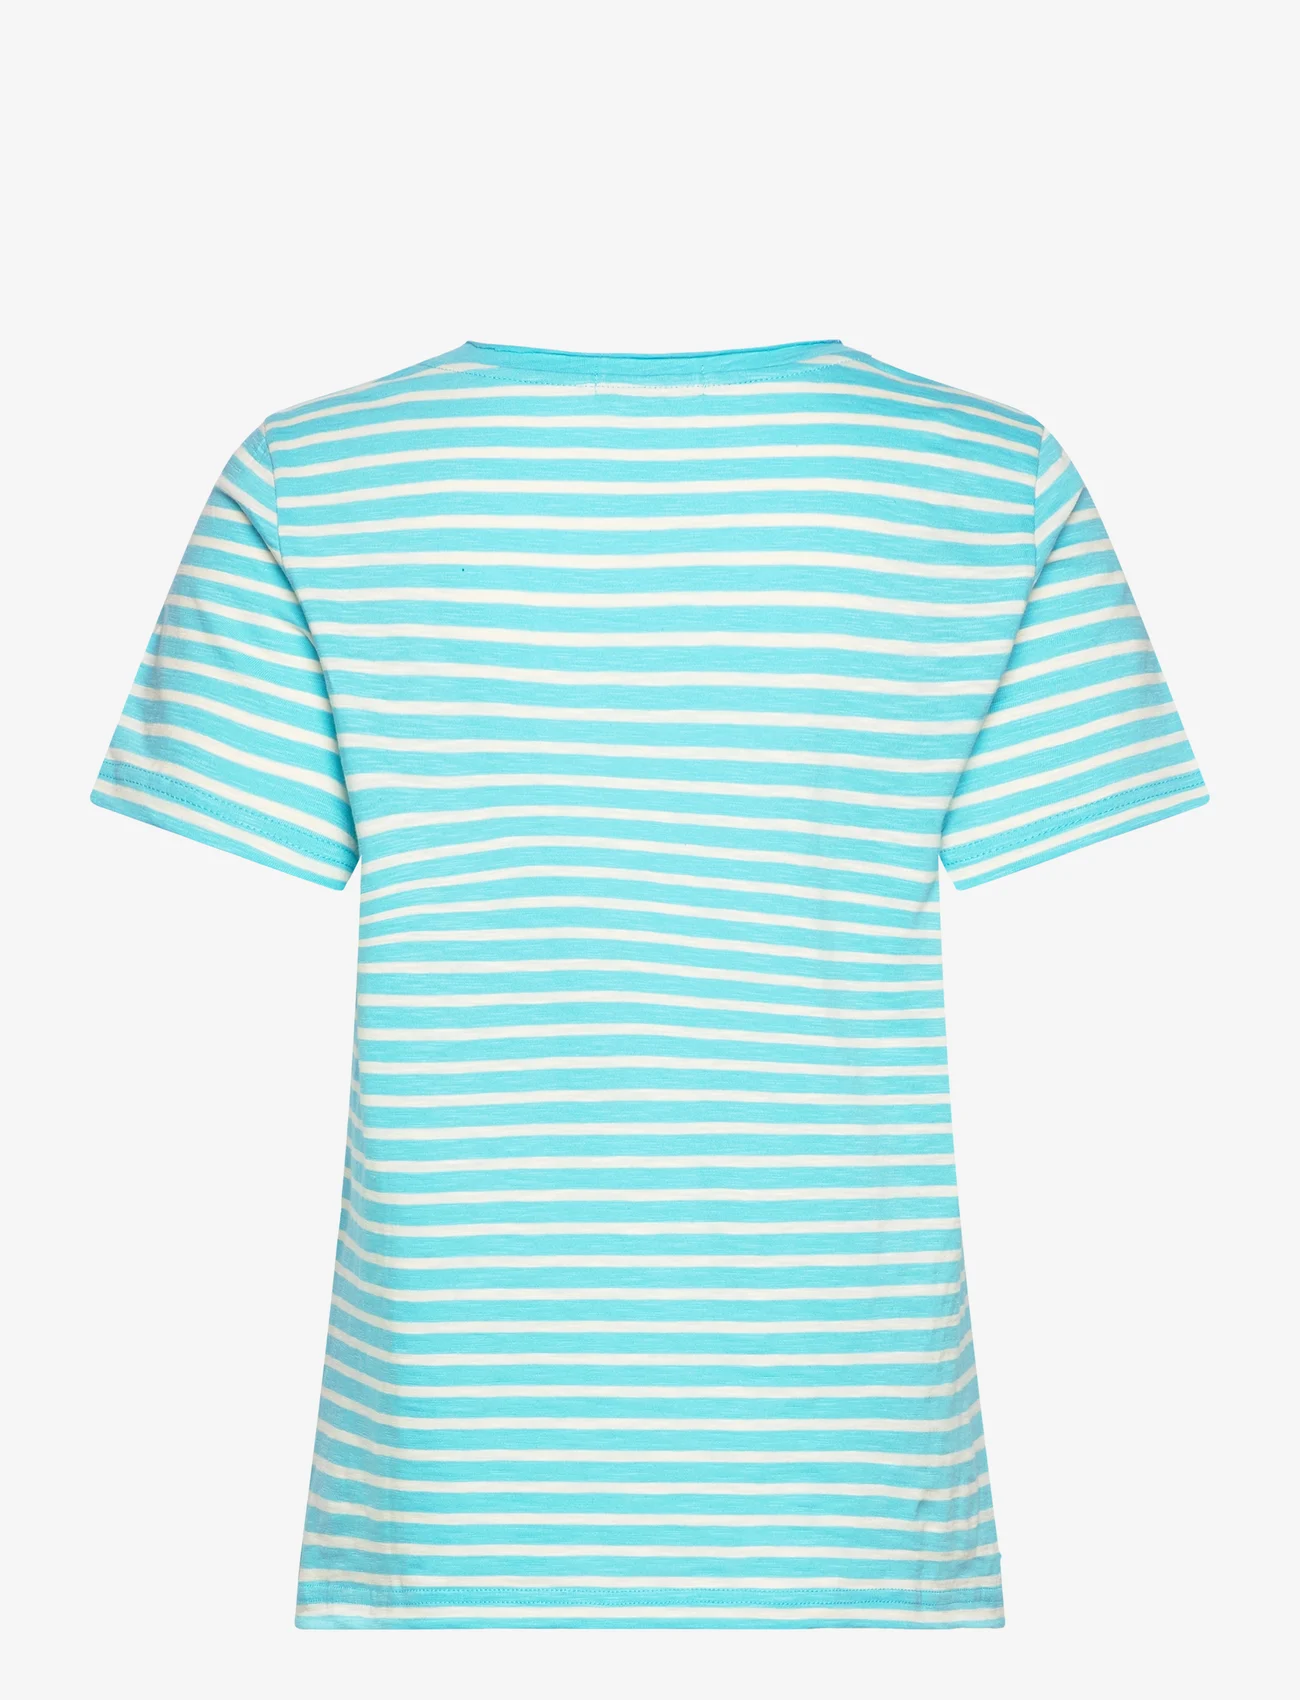 Coster Copenhagen - T-shirt with stripes - Mid sleeve - t-shirts - aqua blue/creme stripe - 1